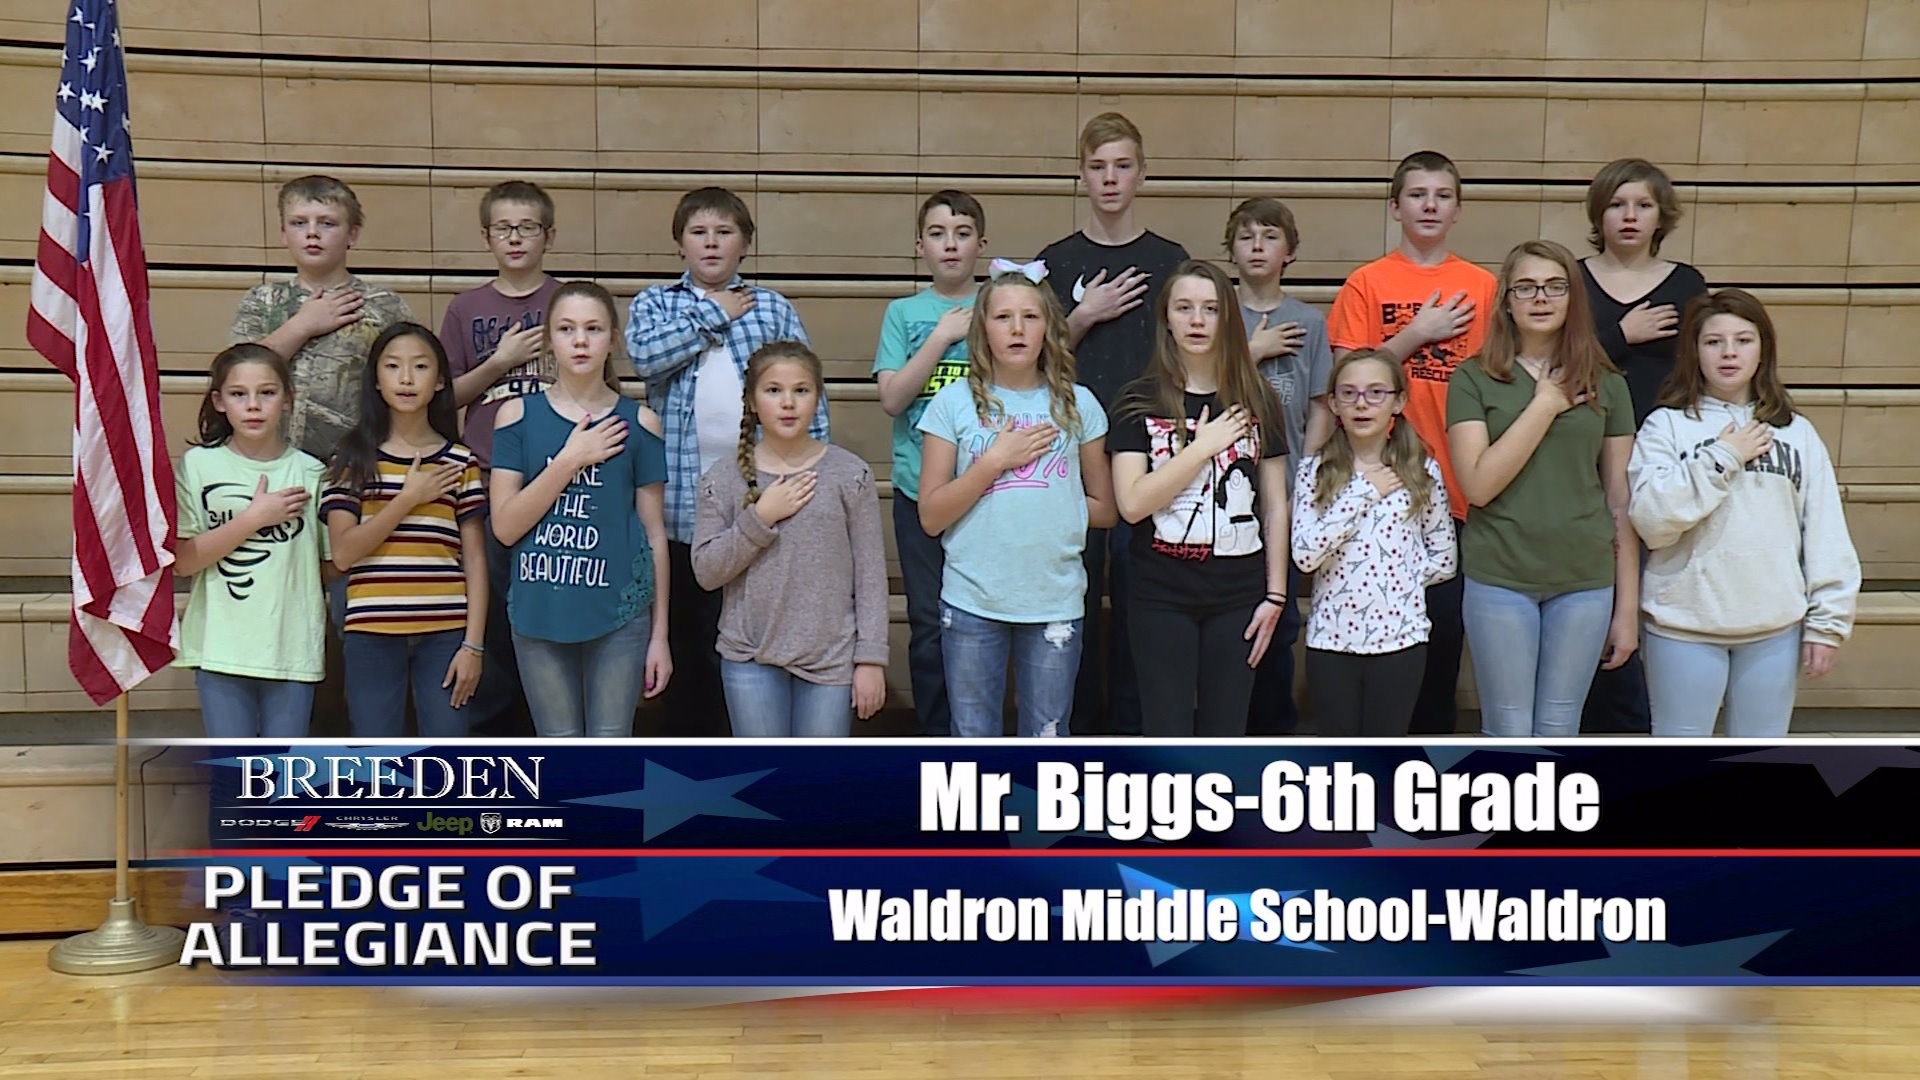 Mr. Biggs  6th Grade Waldron Middle School, Waldron